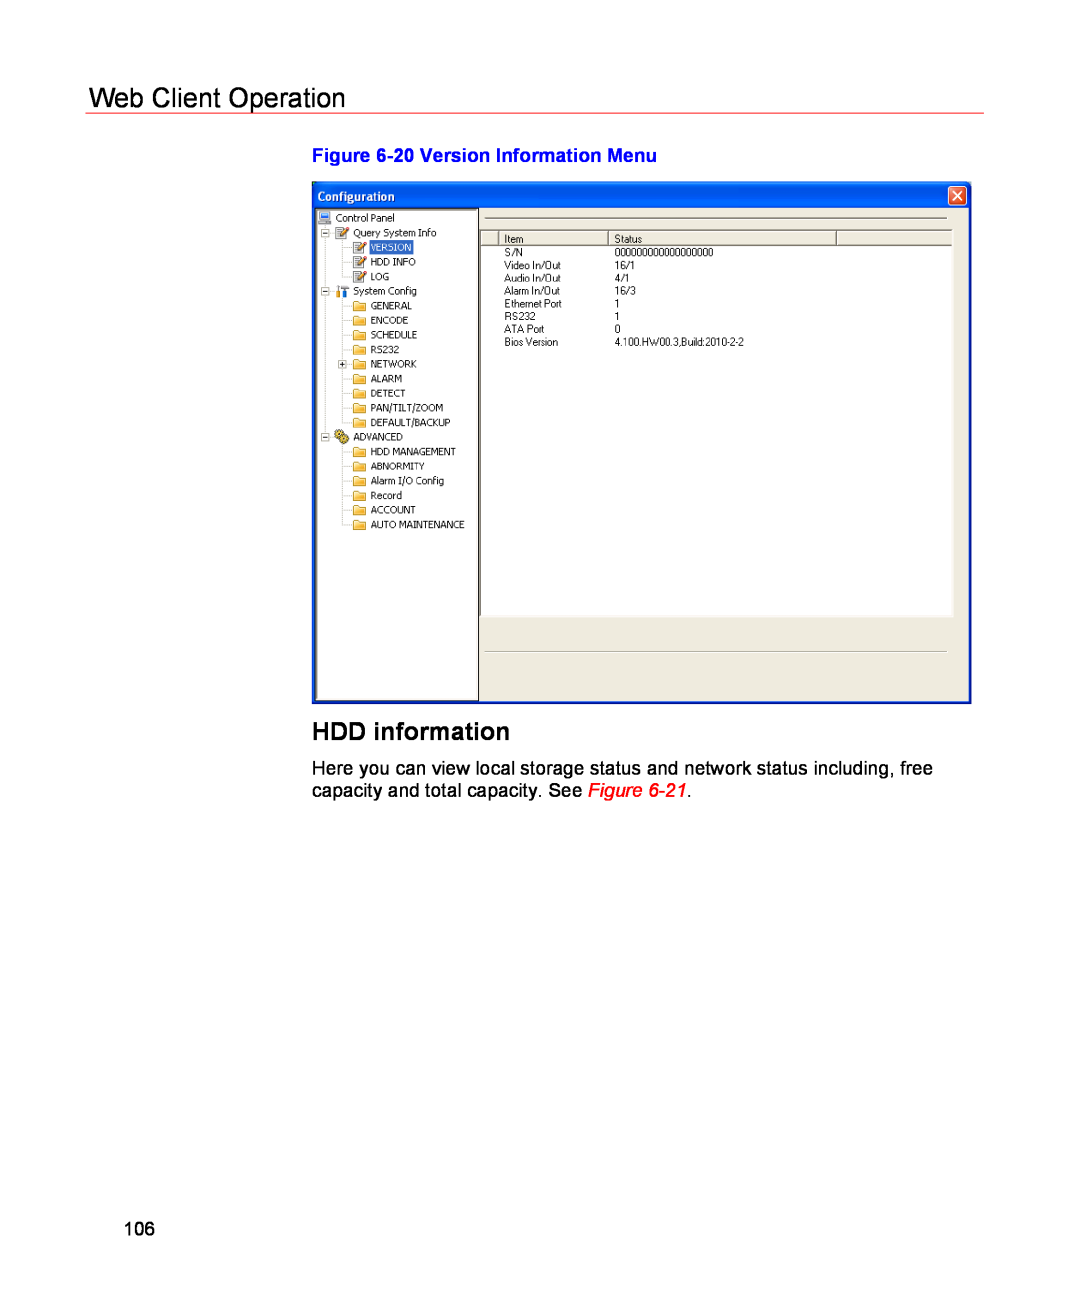 Honeywell HSVR-04, HSVR-16 user manual HDD information, Web Client Operation, 20 Version Information Menu 